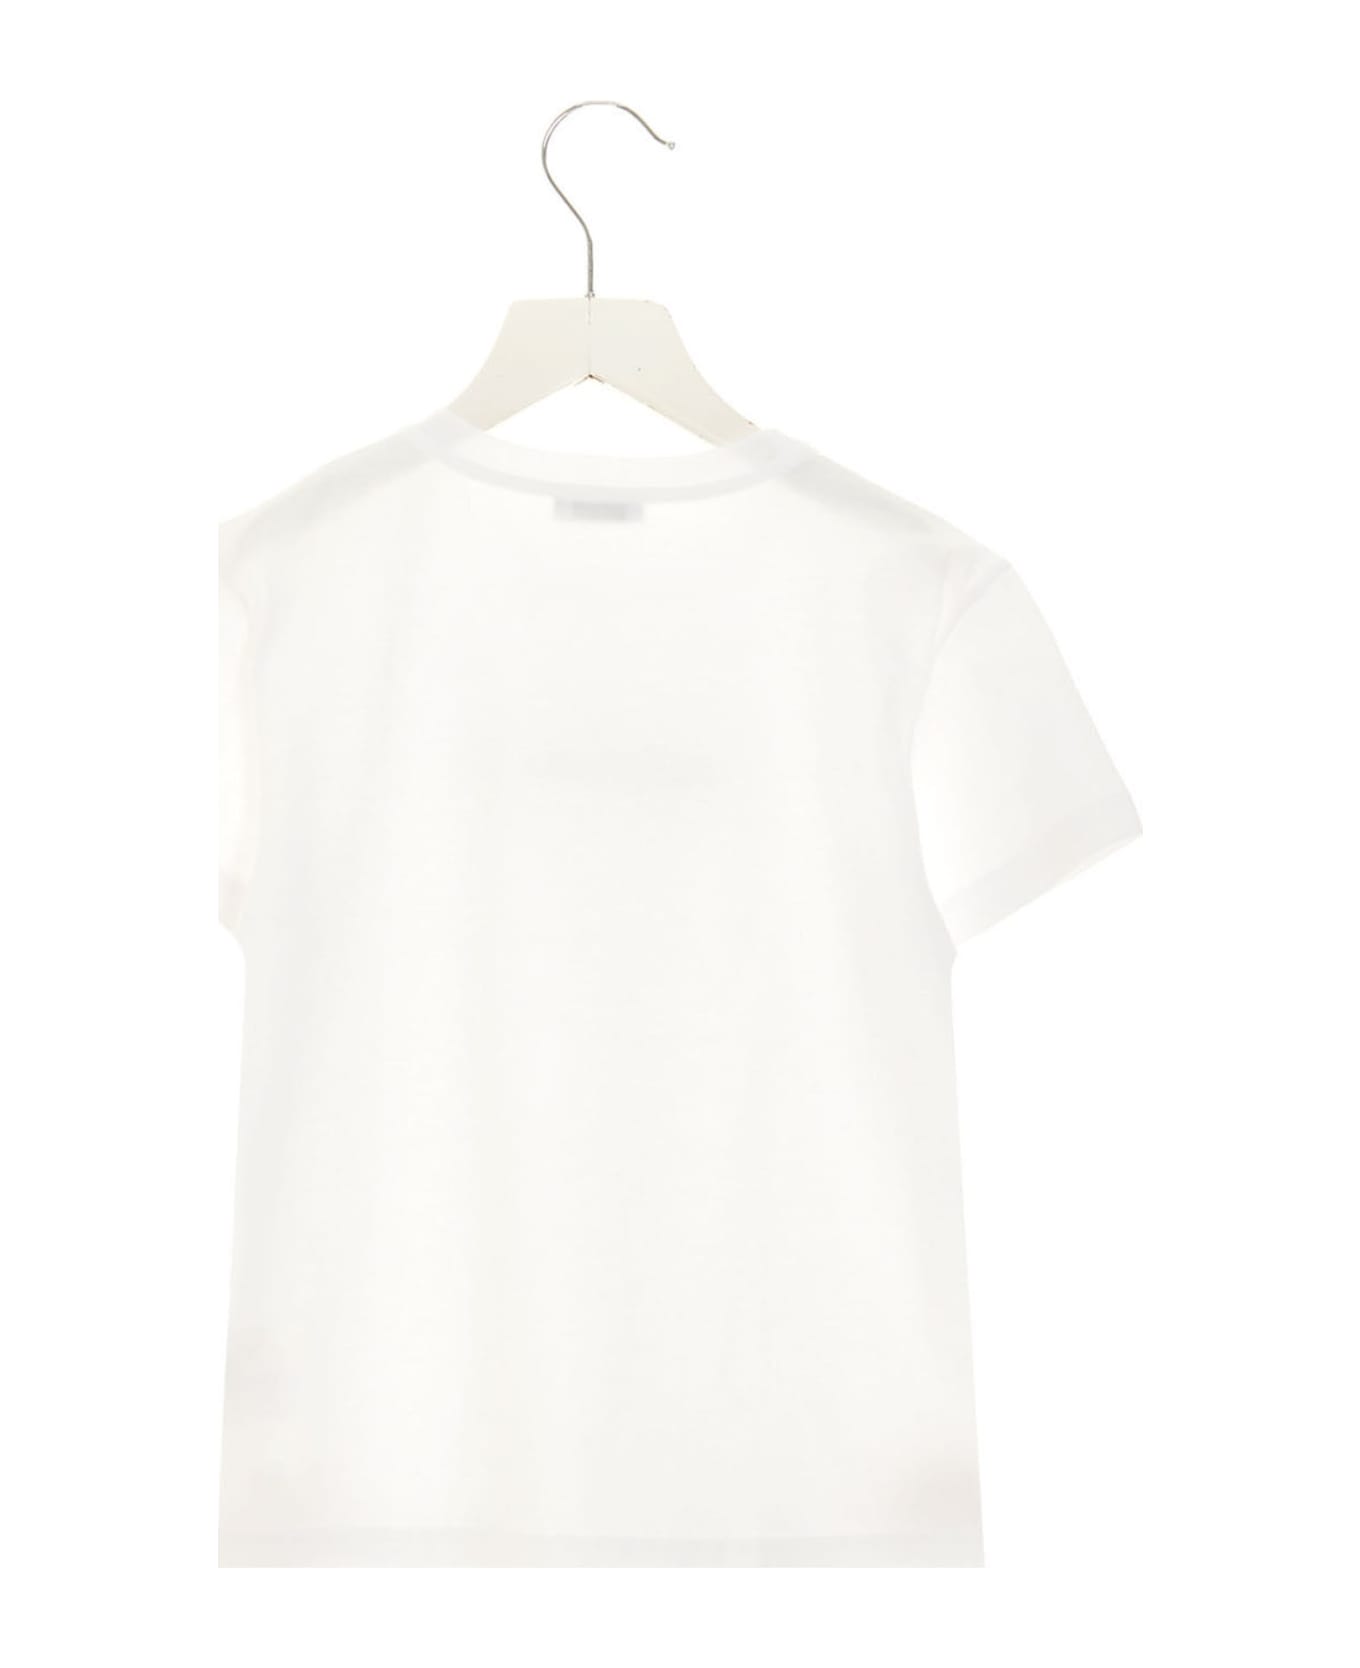 Dolce & Gabbana Logo Embroidery T-shirt - WHITE